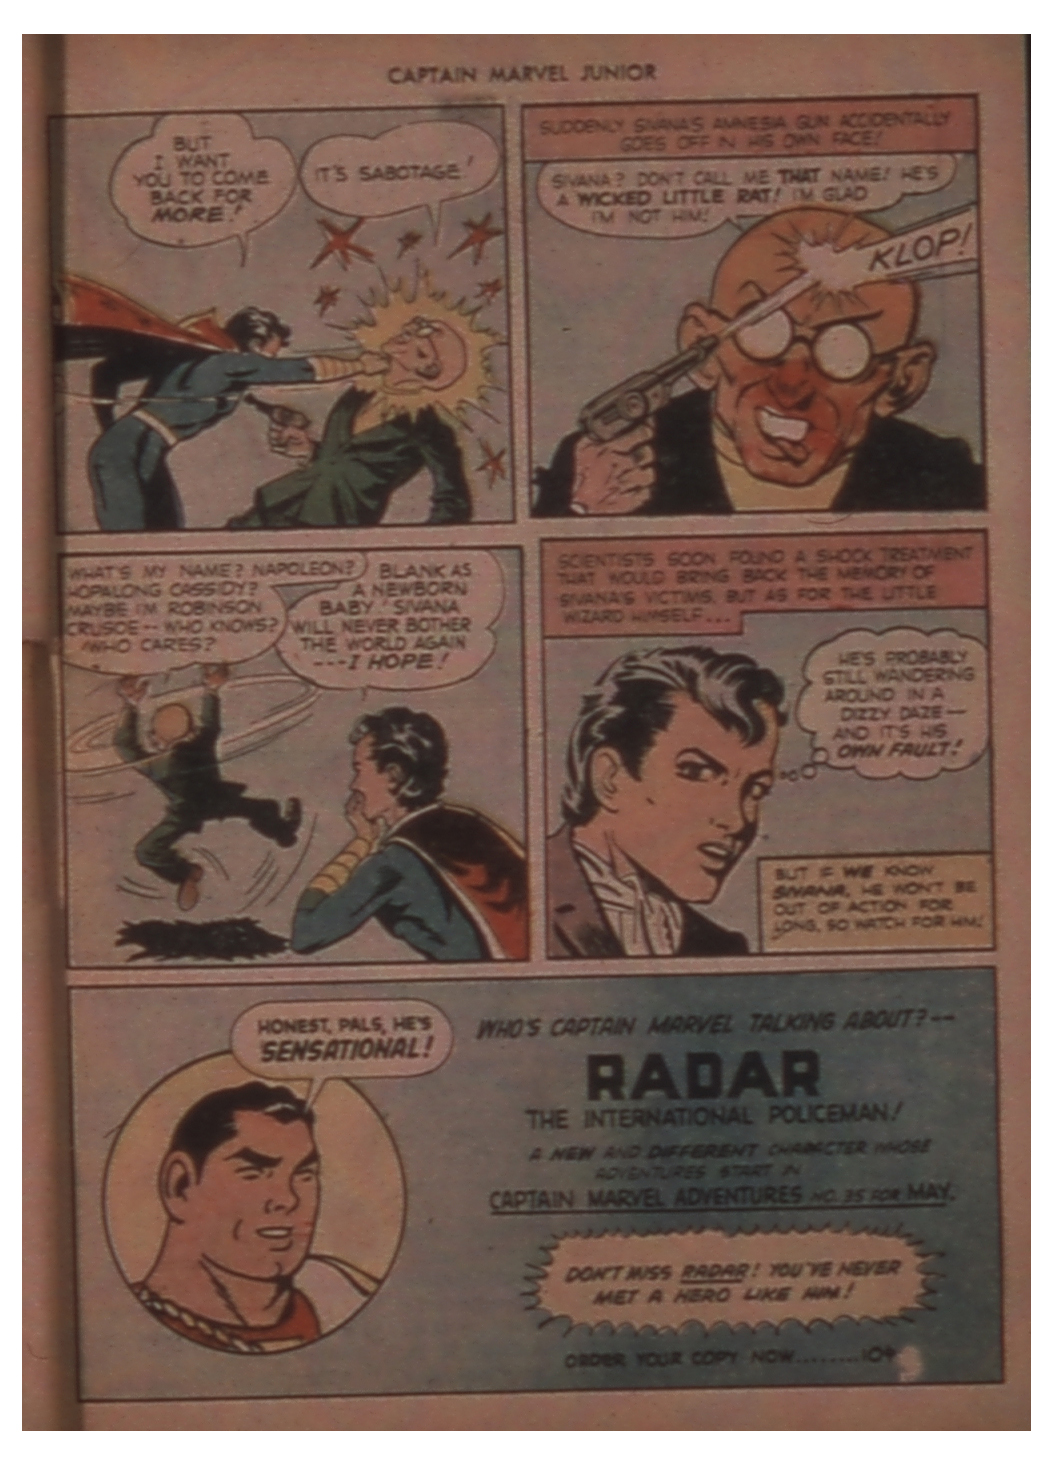 Read online Captain Marvel, Jr. comic -  Issue #18 - 37